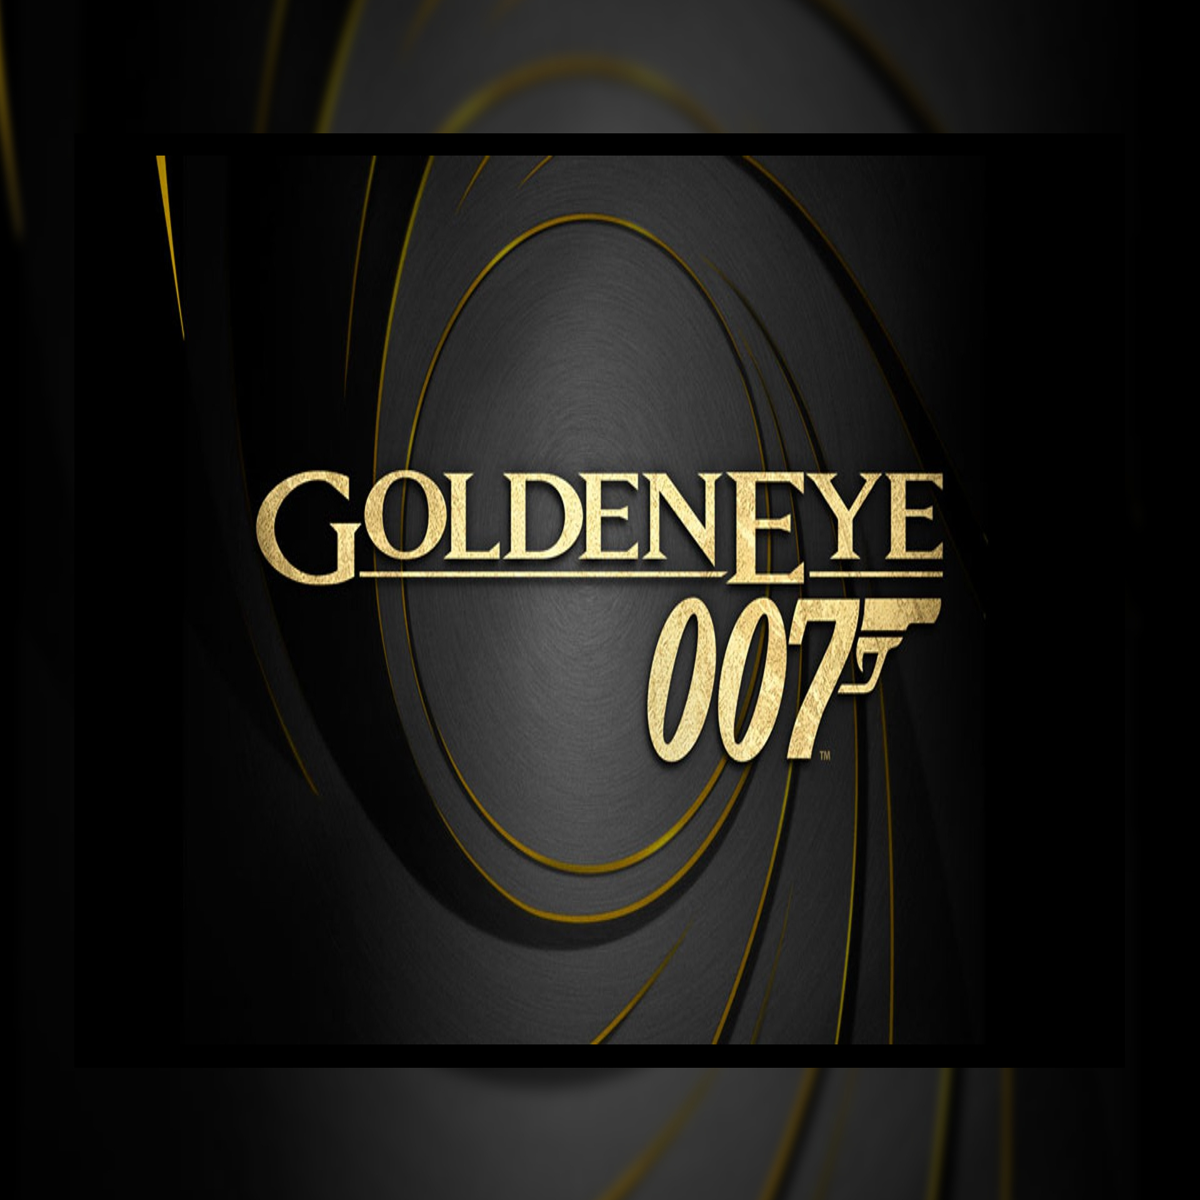 GoldenEye 007: Reloaded hands-on preview